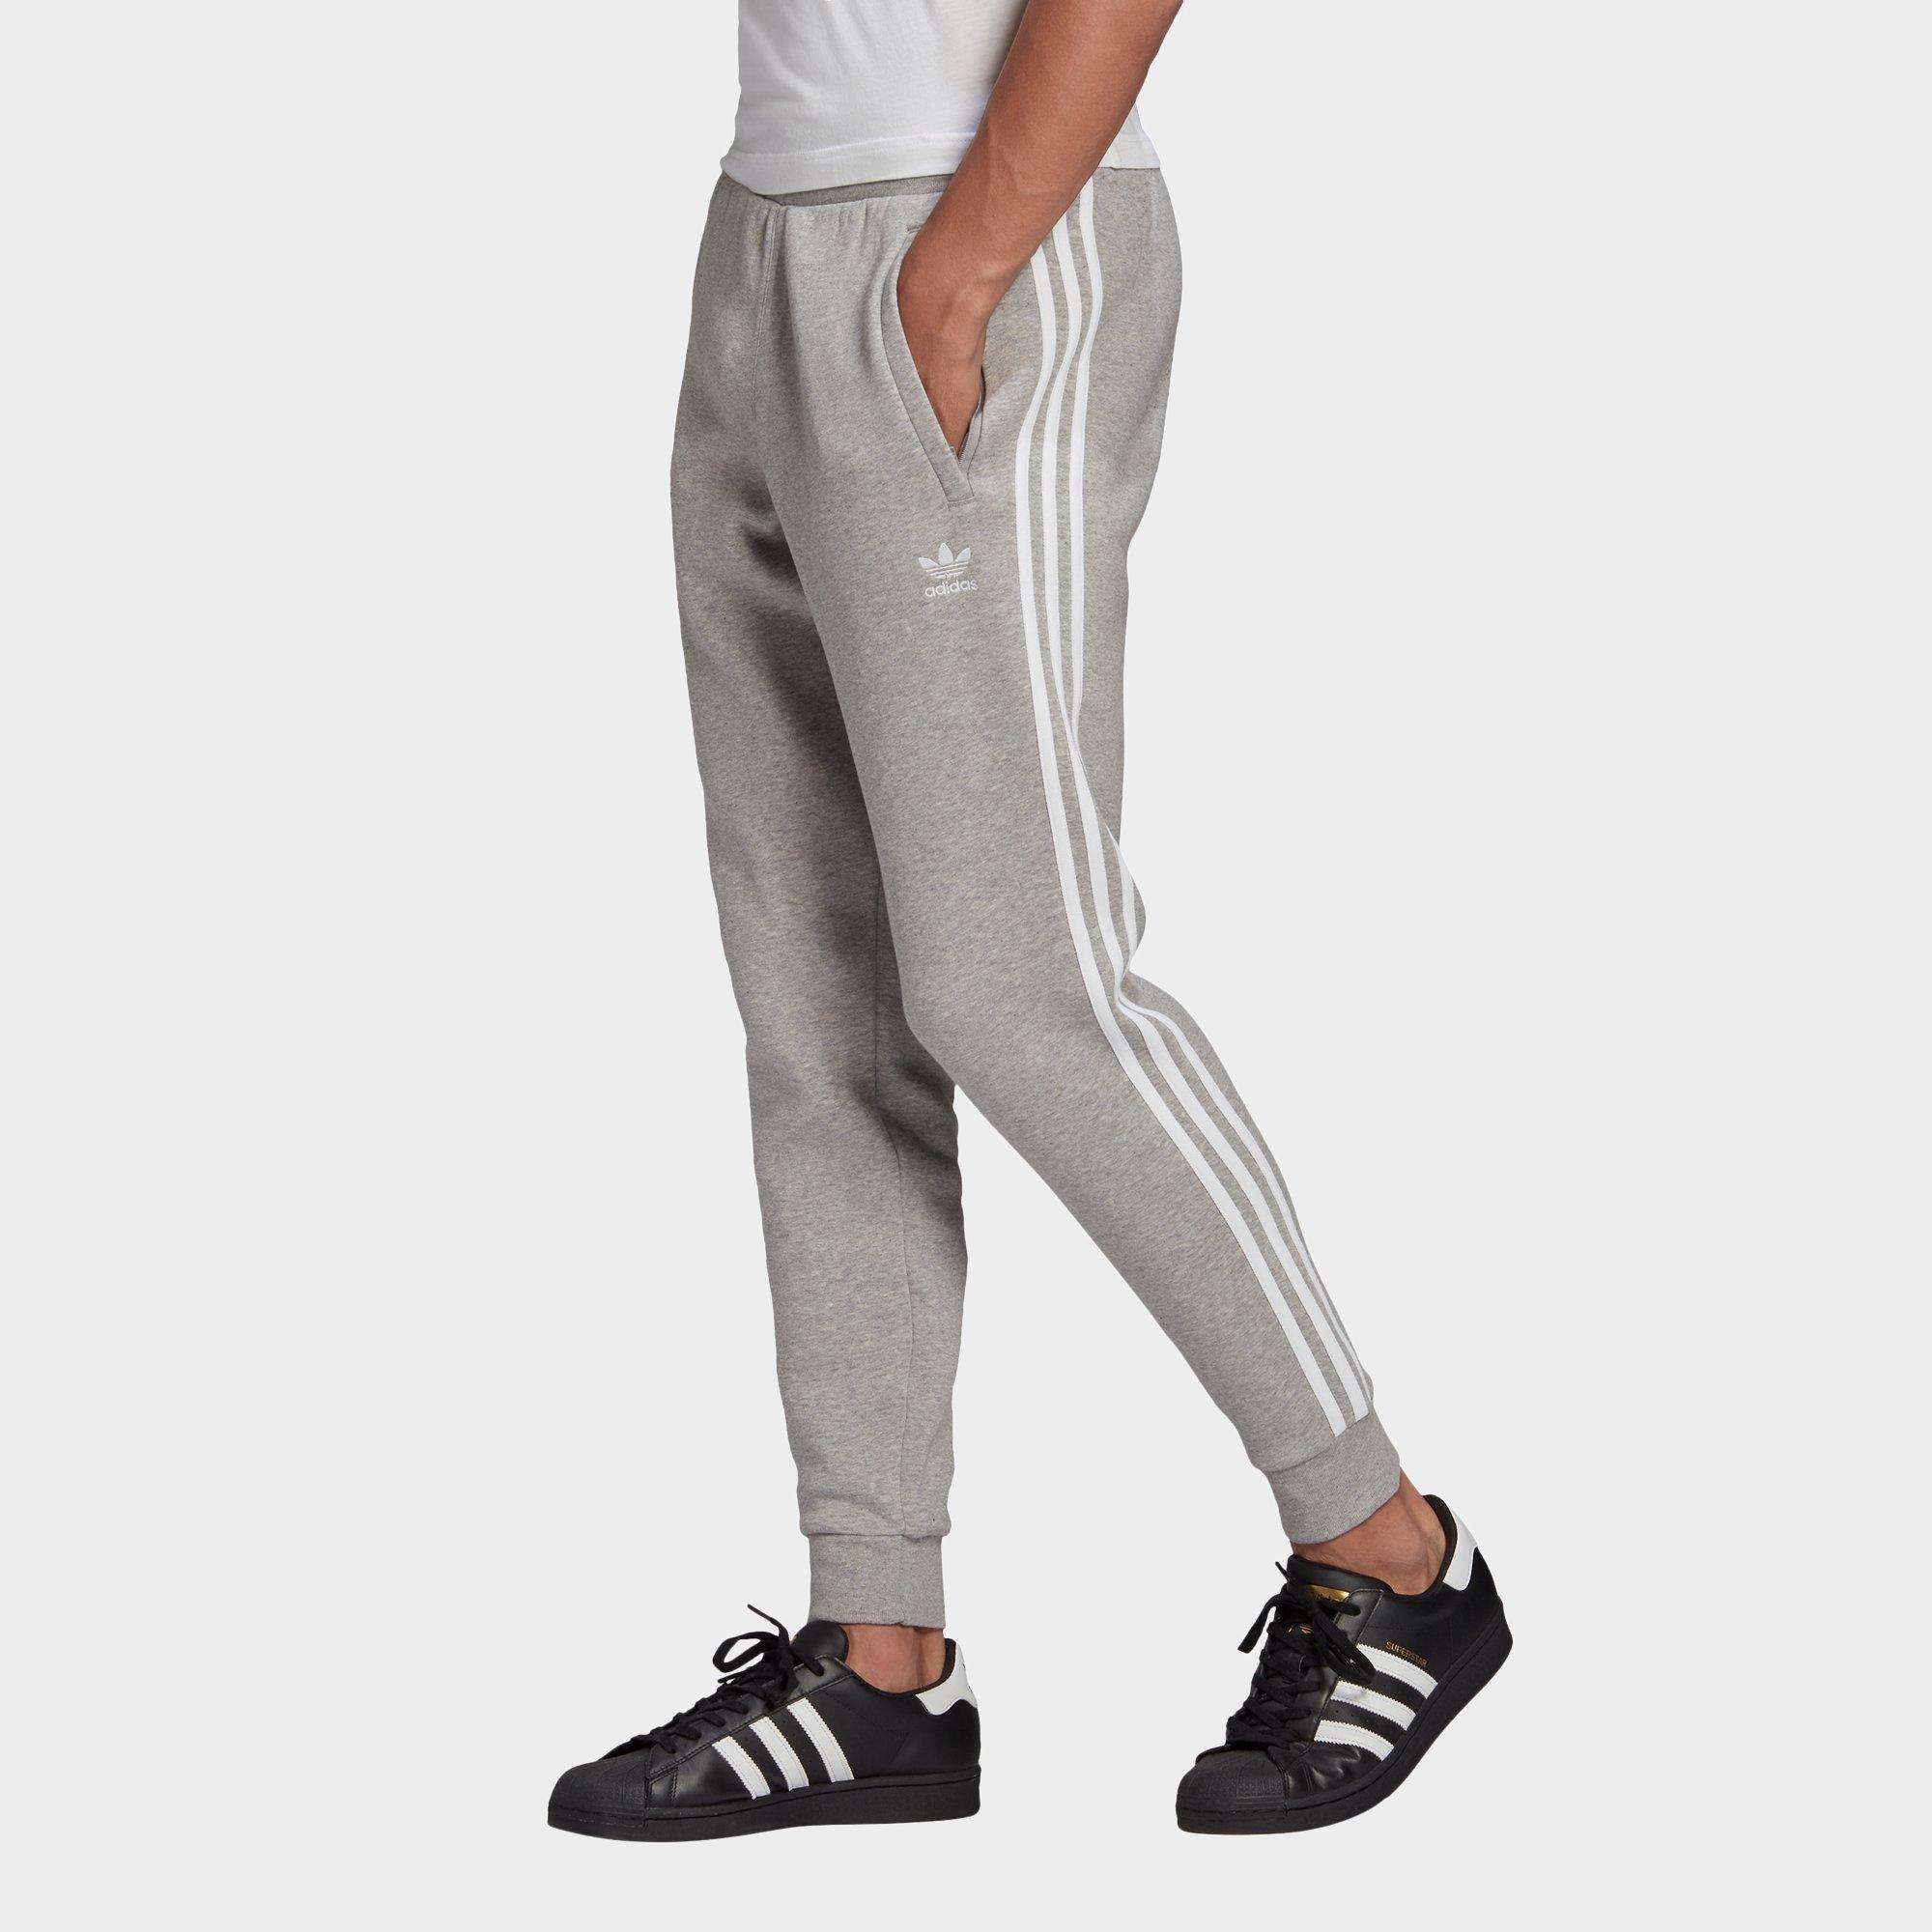 adidas pants with three stripes